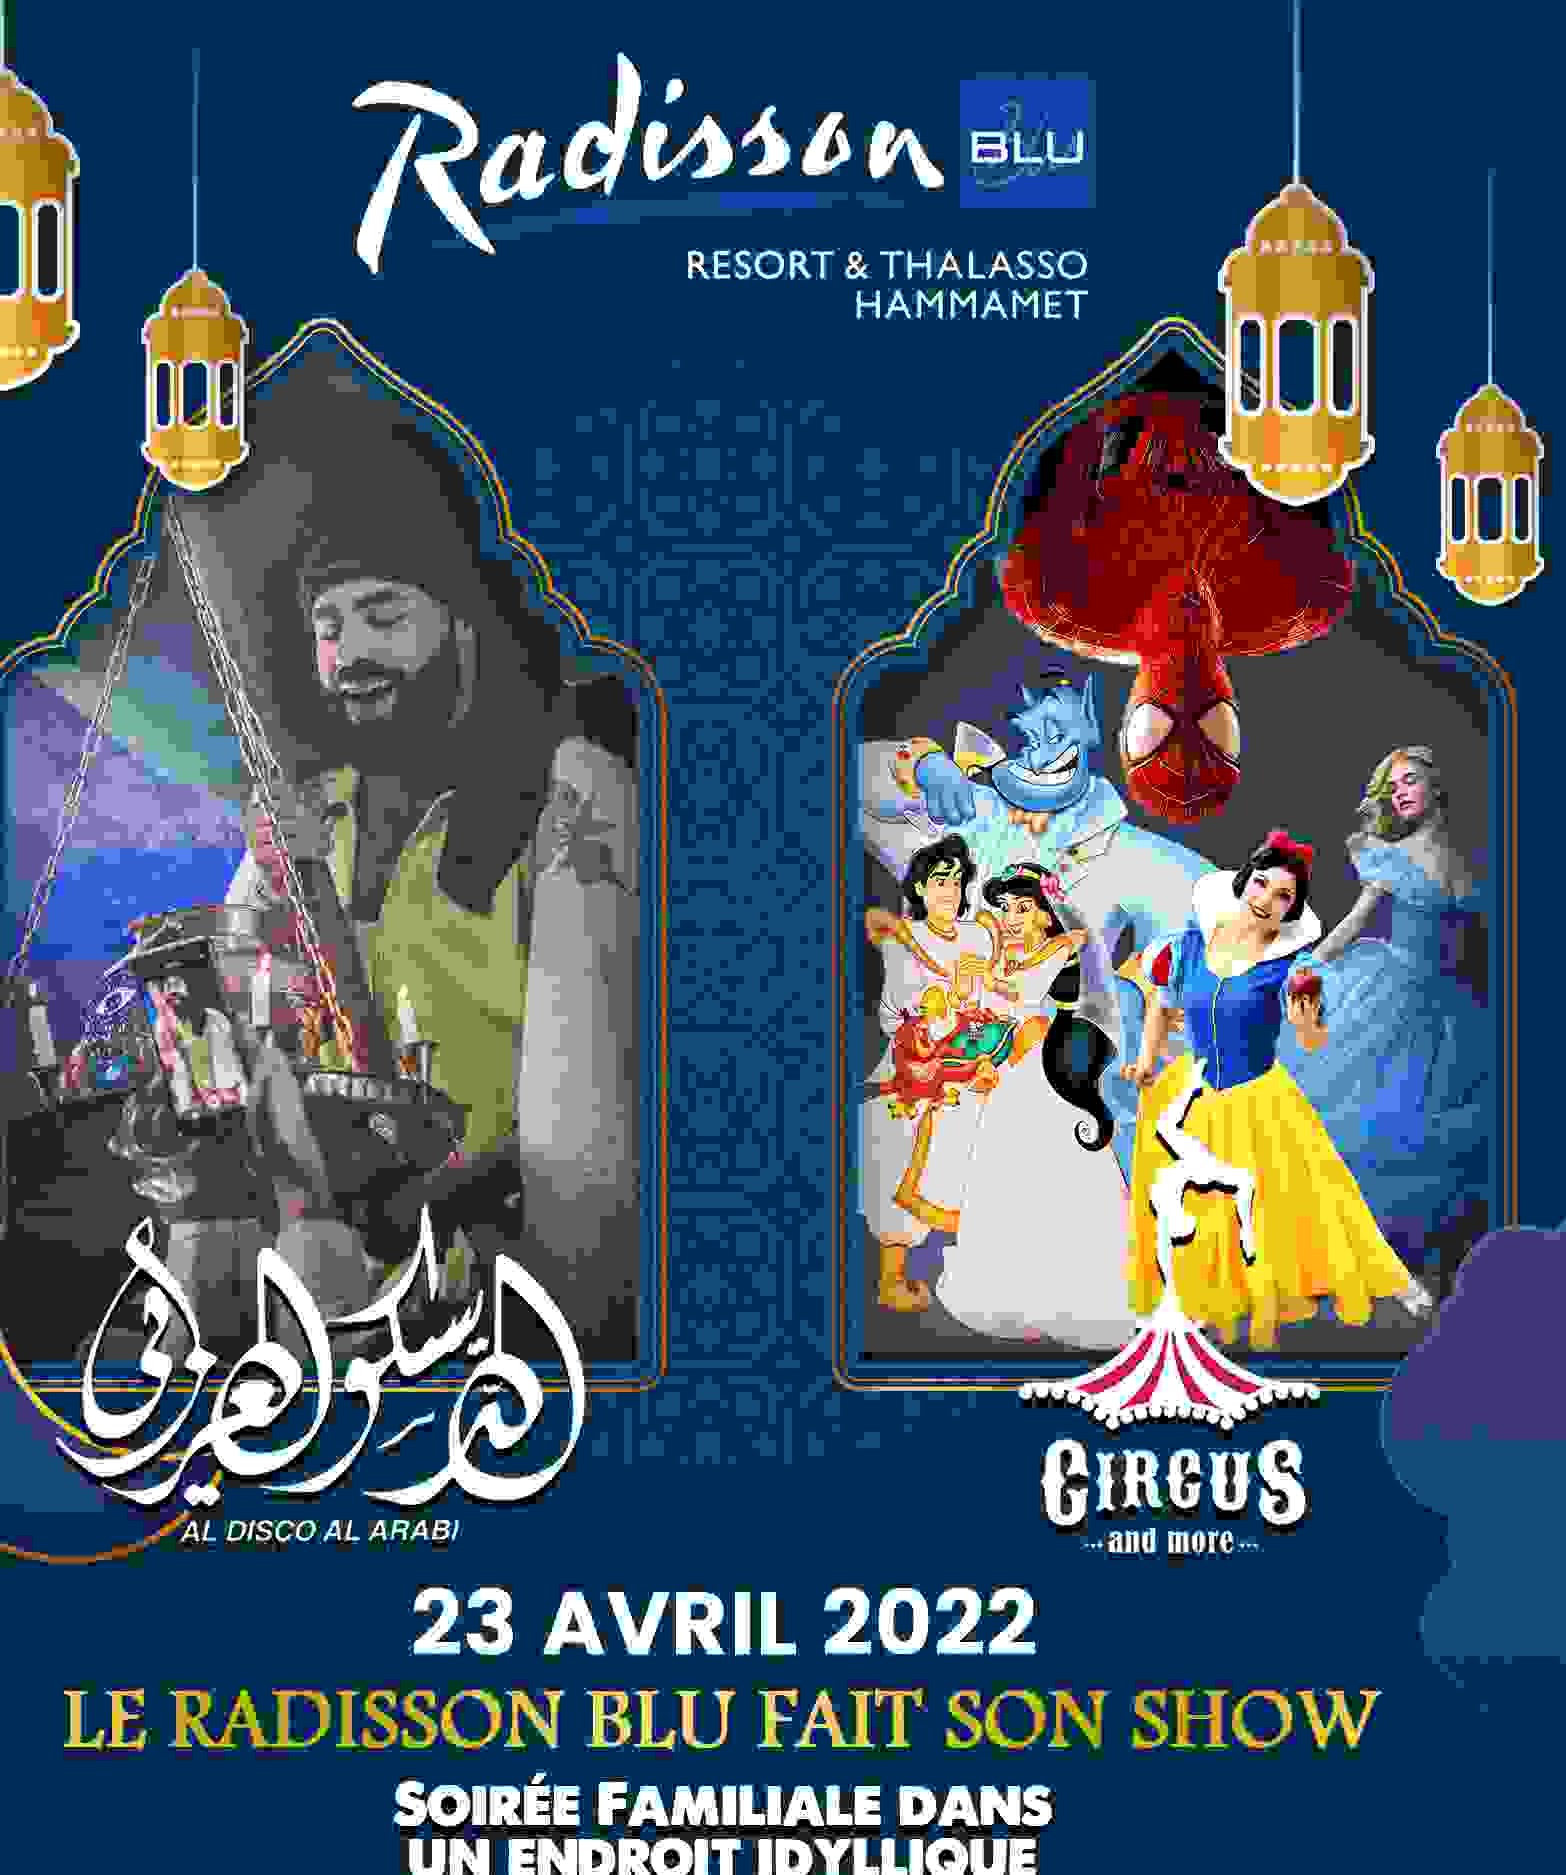 Radisson Blu Resort & Thalasso Hammamet Fait Son Show